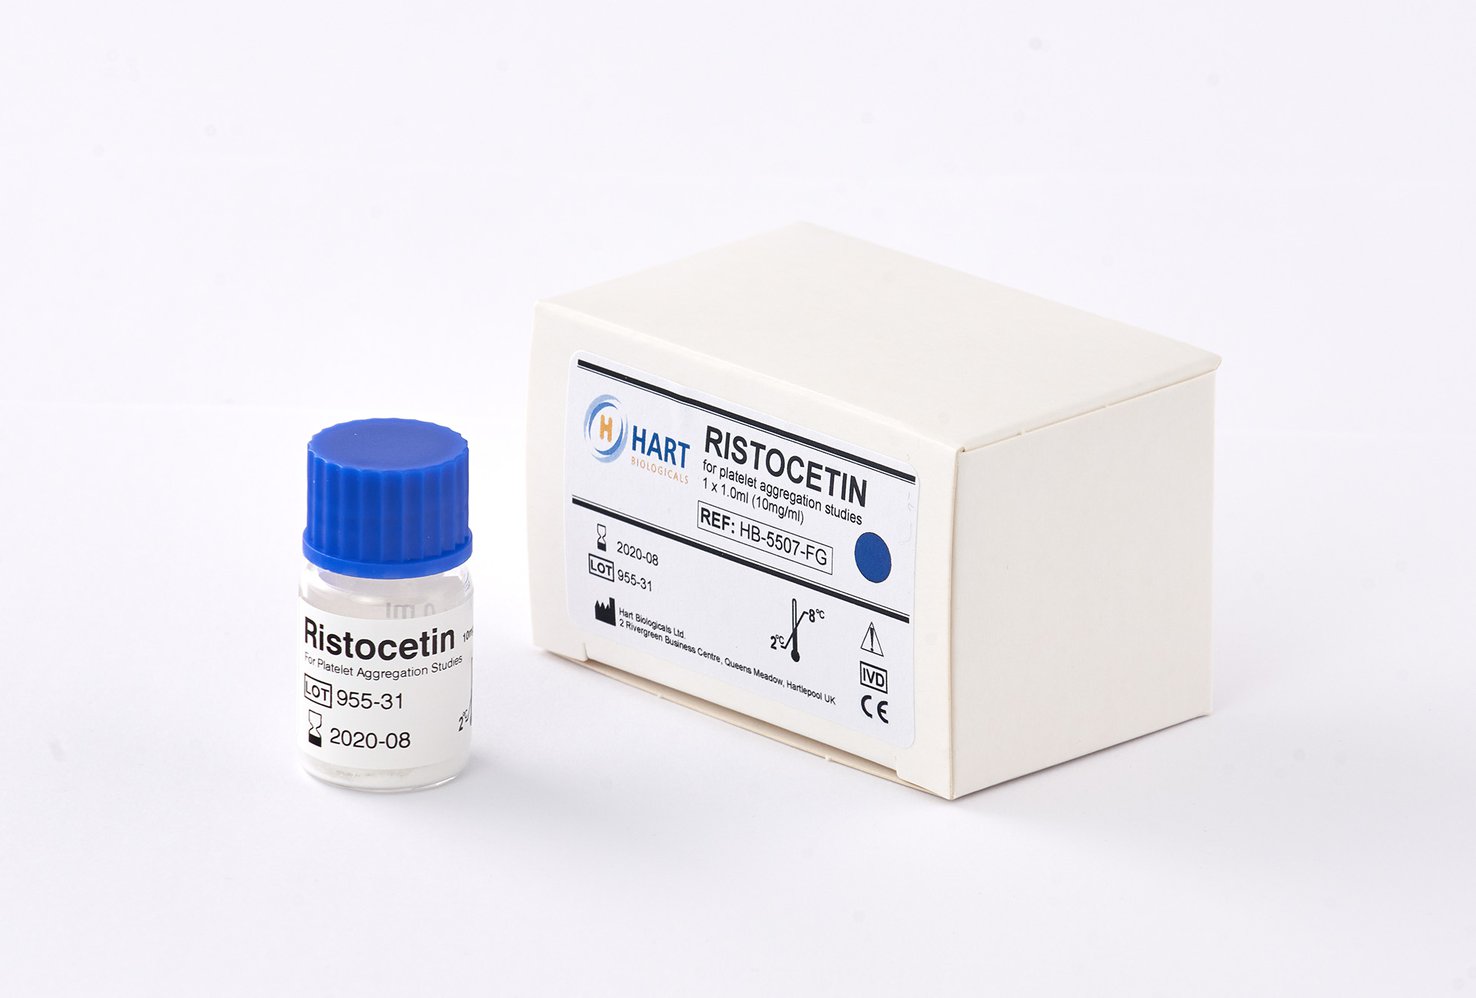 Ristocetin 10mg/ml - 2 x 1.0ml